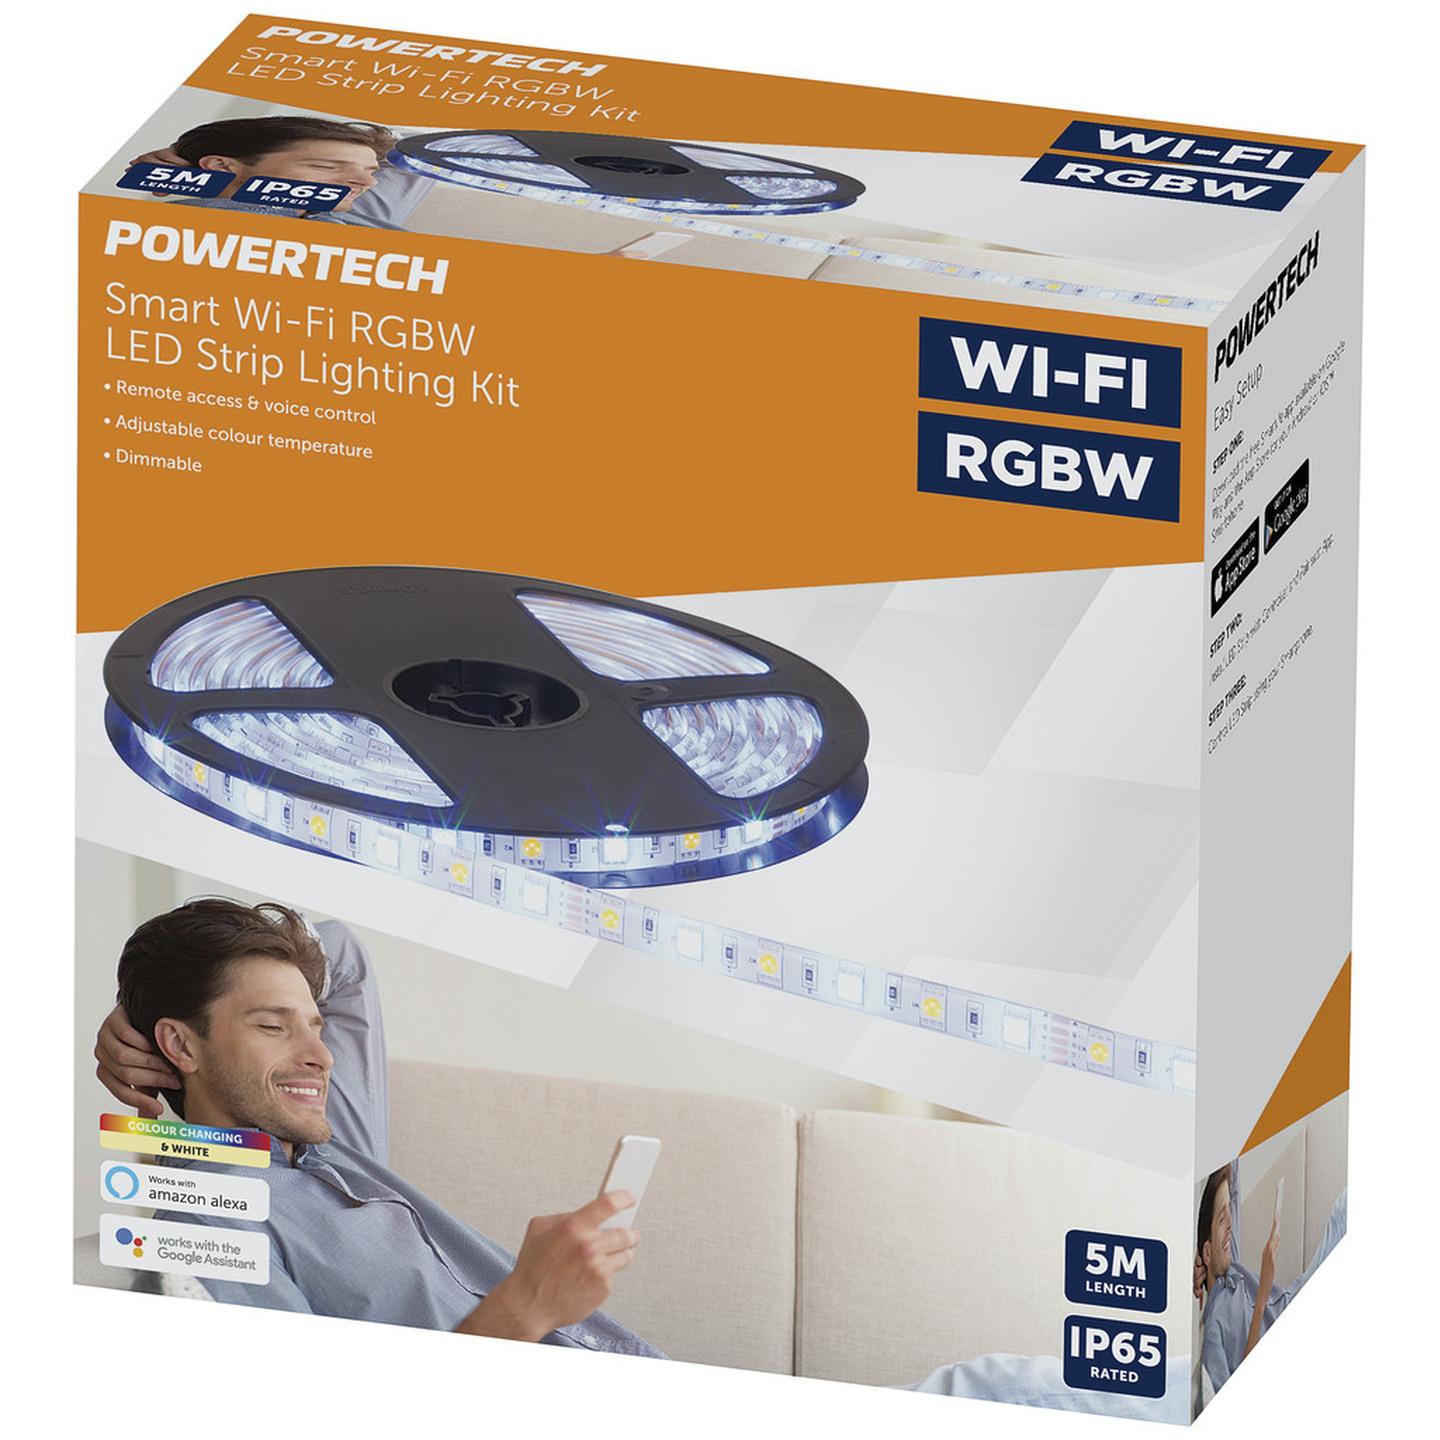 Smart Wi-Fi RGBW LED Strip Lighting Kit with Easy App Control